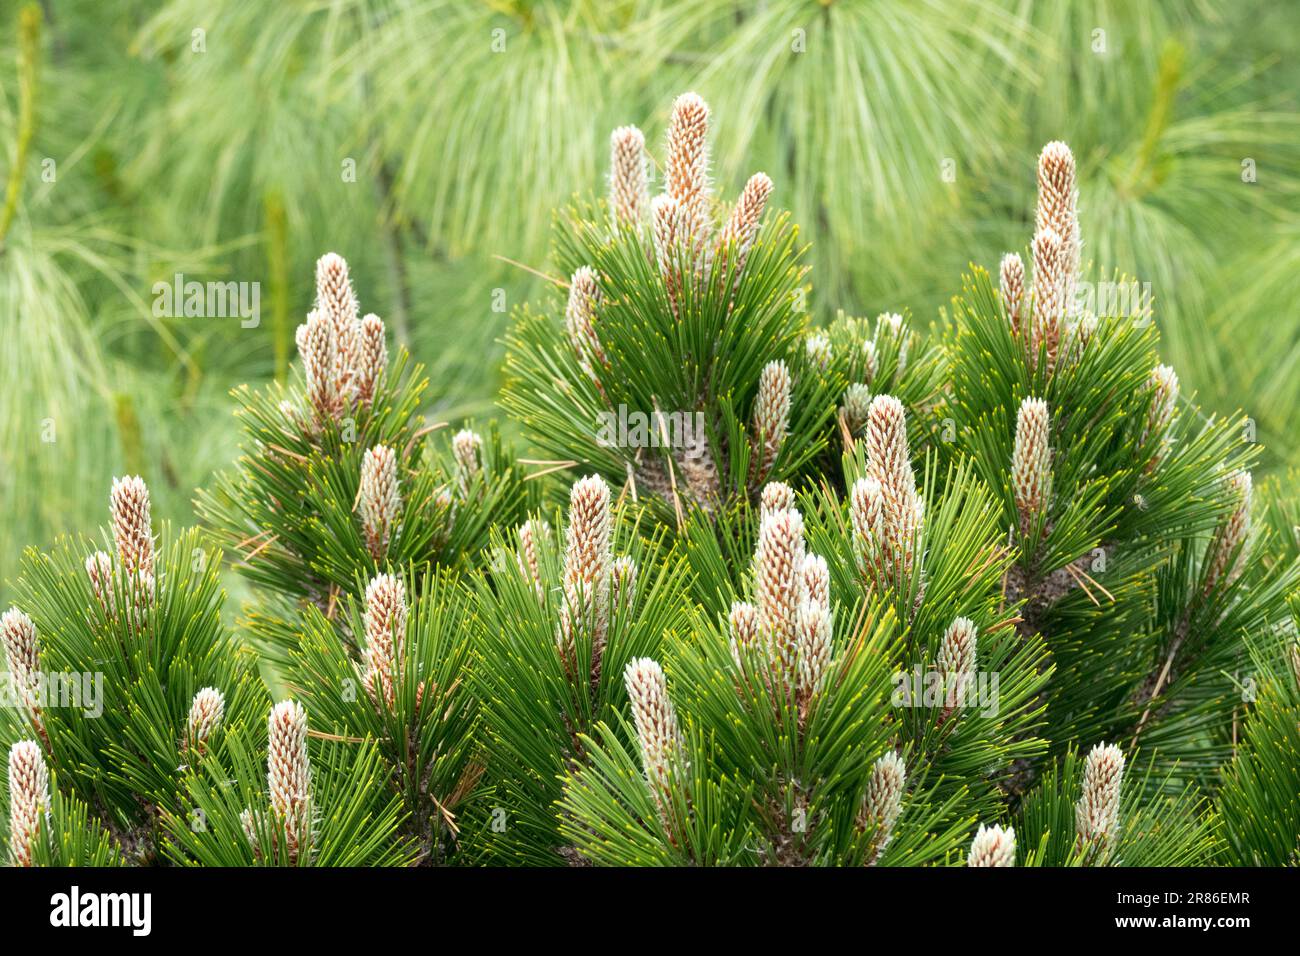 Bosnian Pine, Pinus heldreichii 'Karmel' Stock Photo